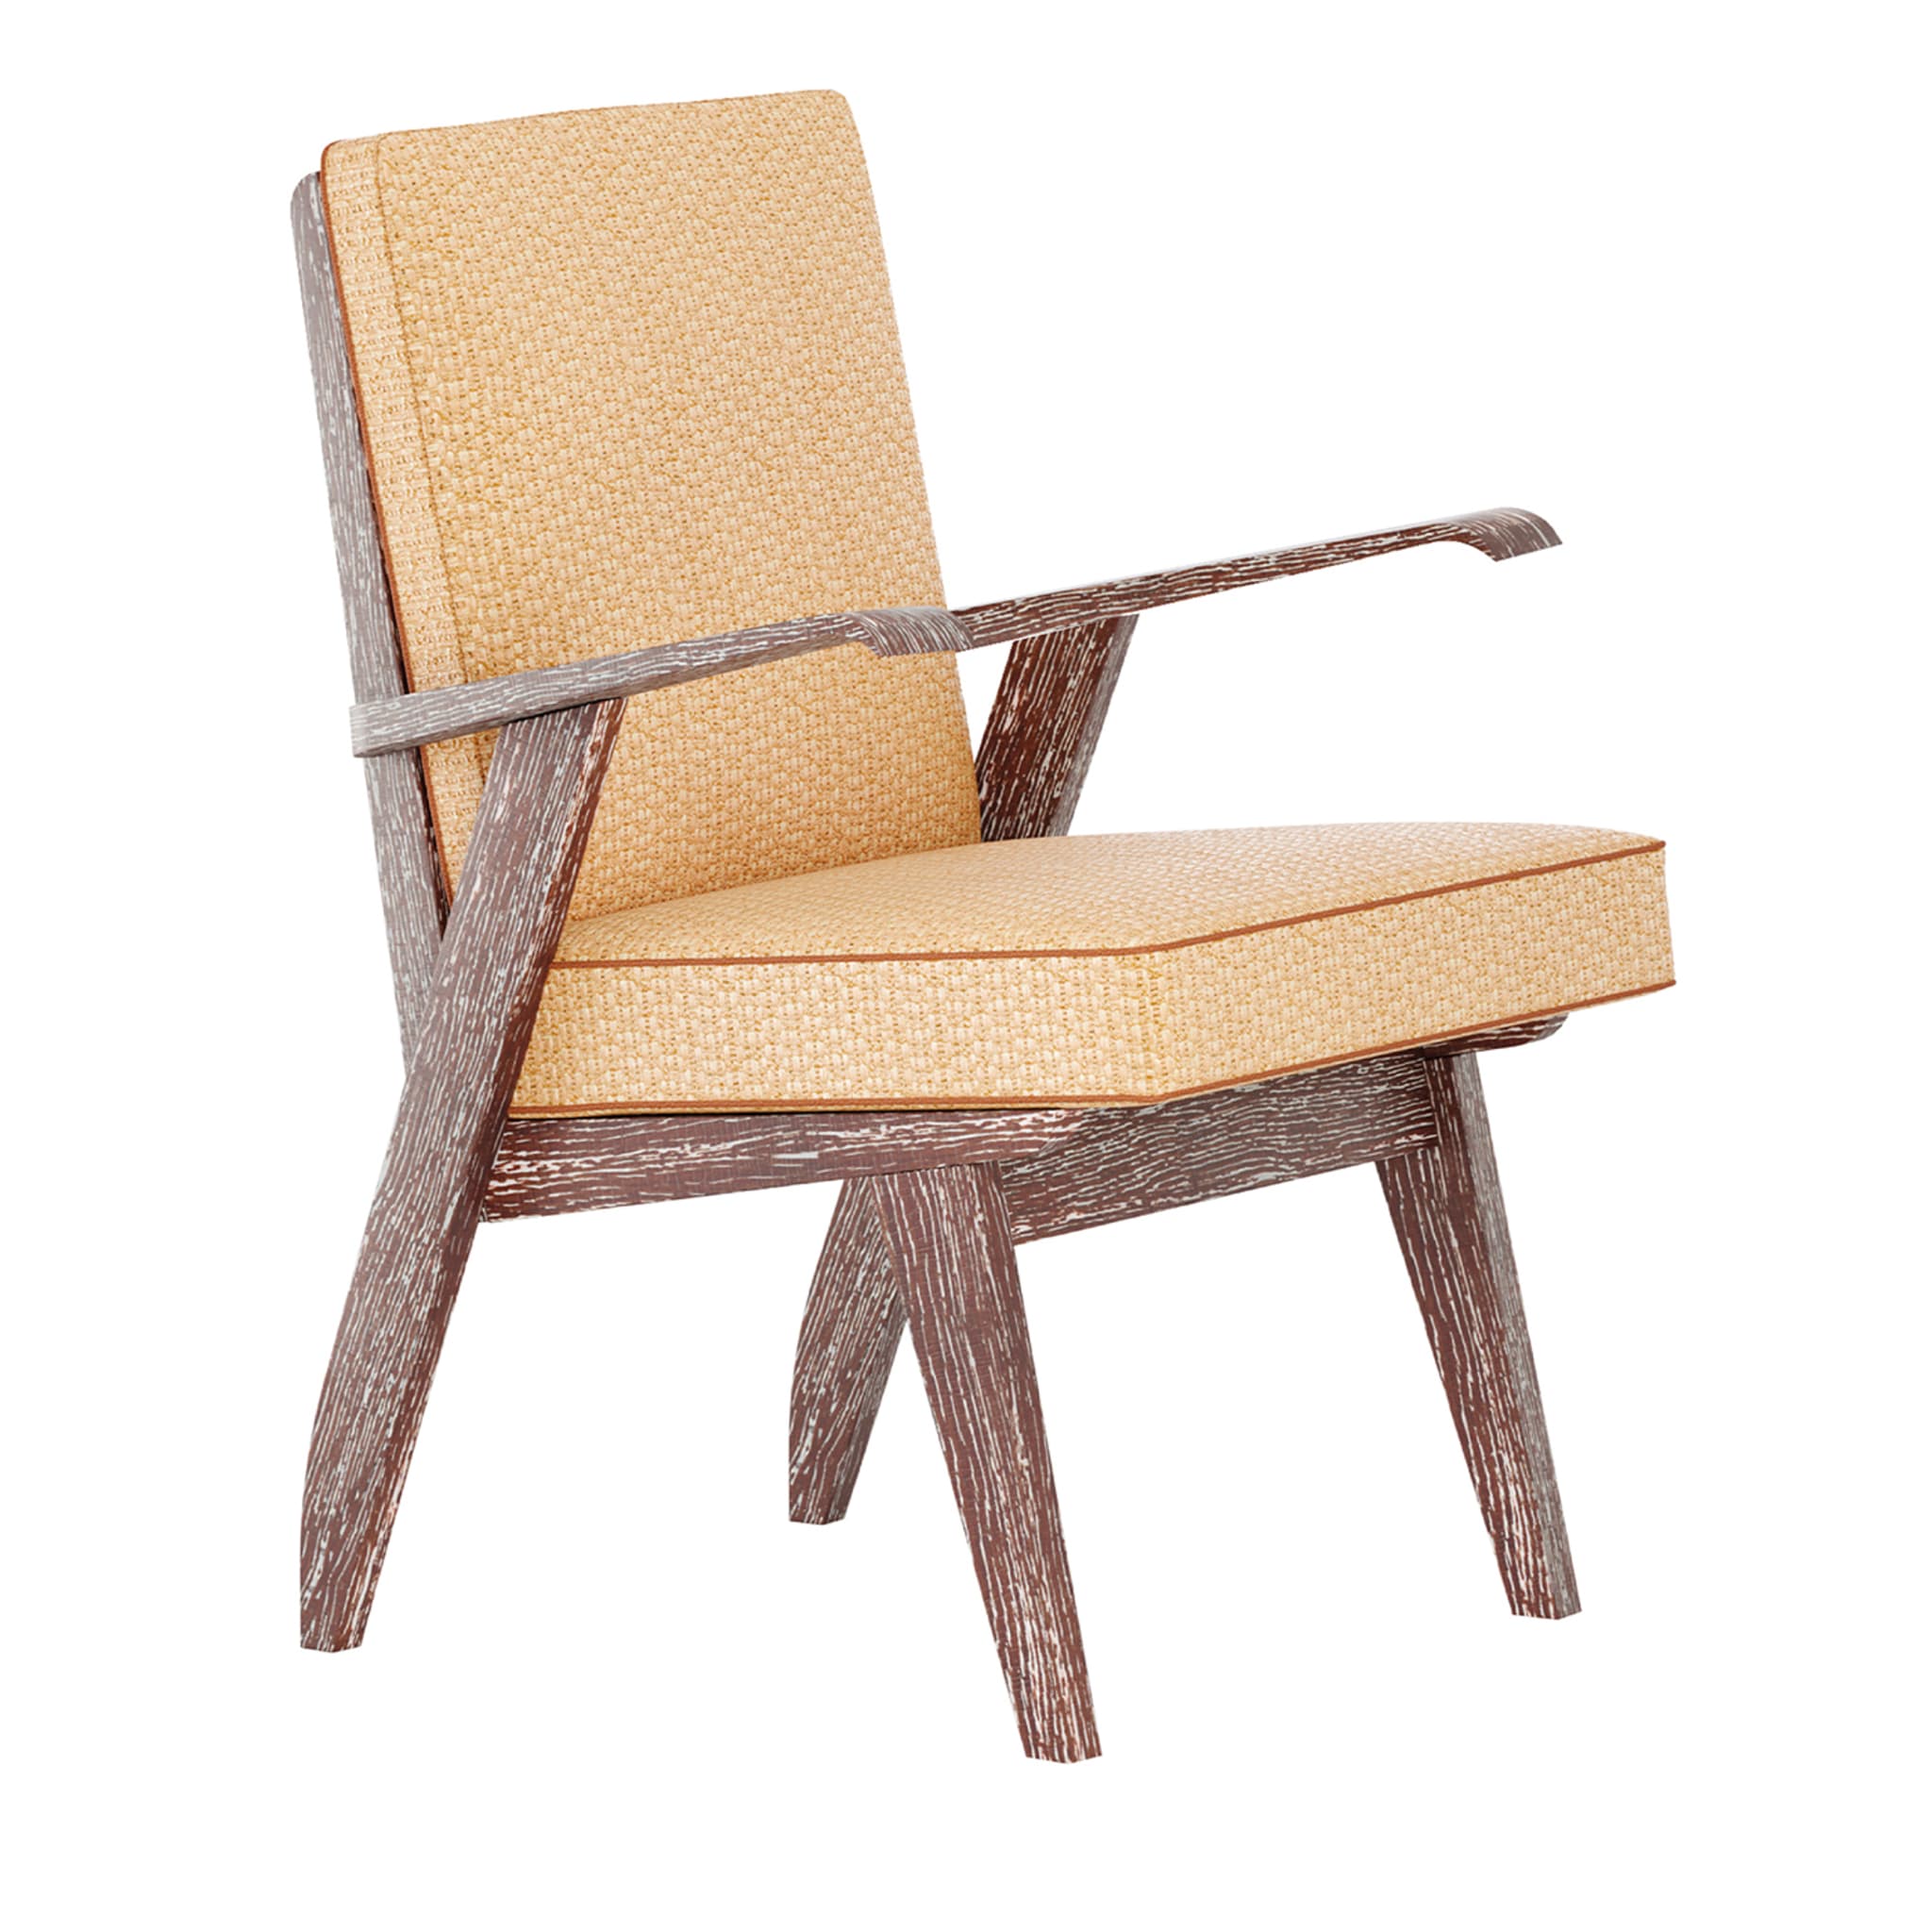 CHRIS Padouk Chair with armrests - Main view